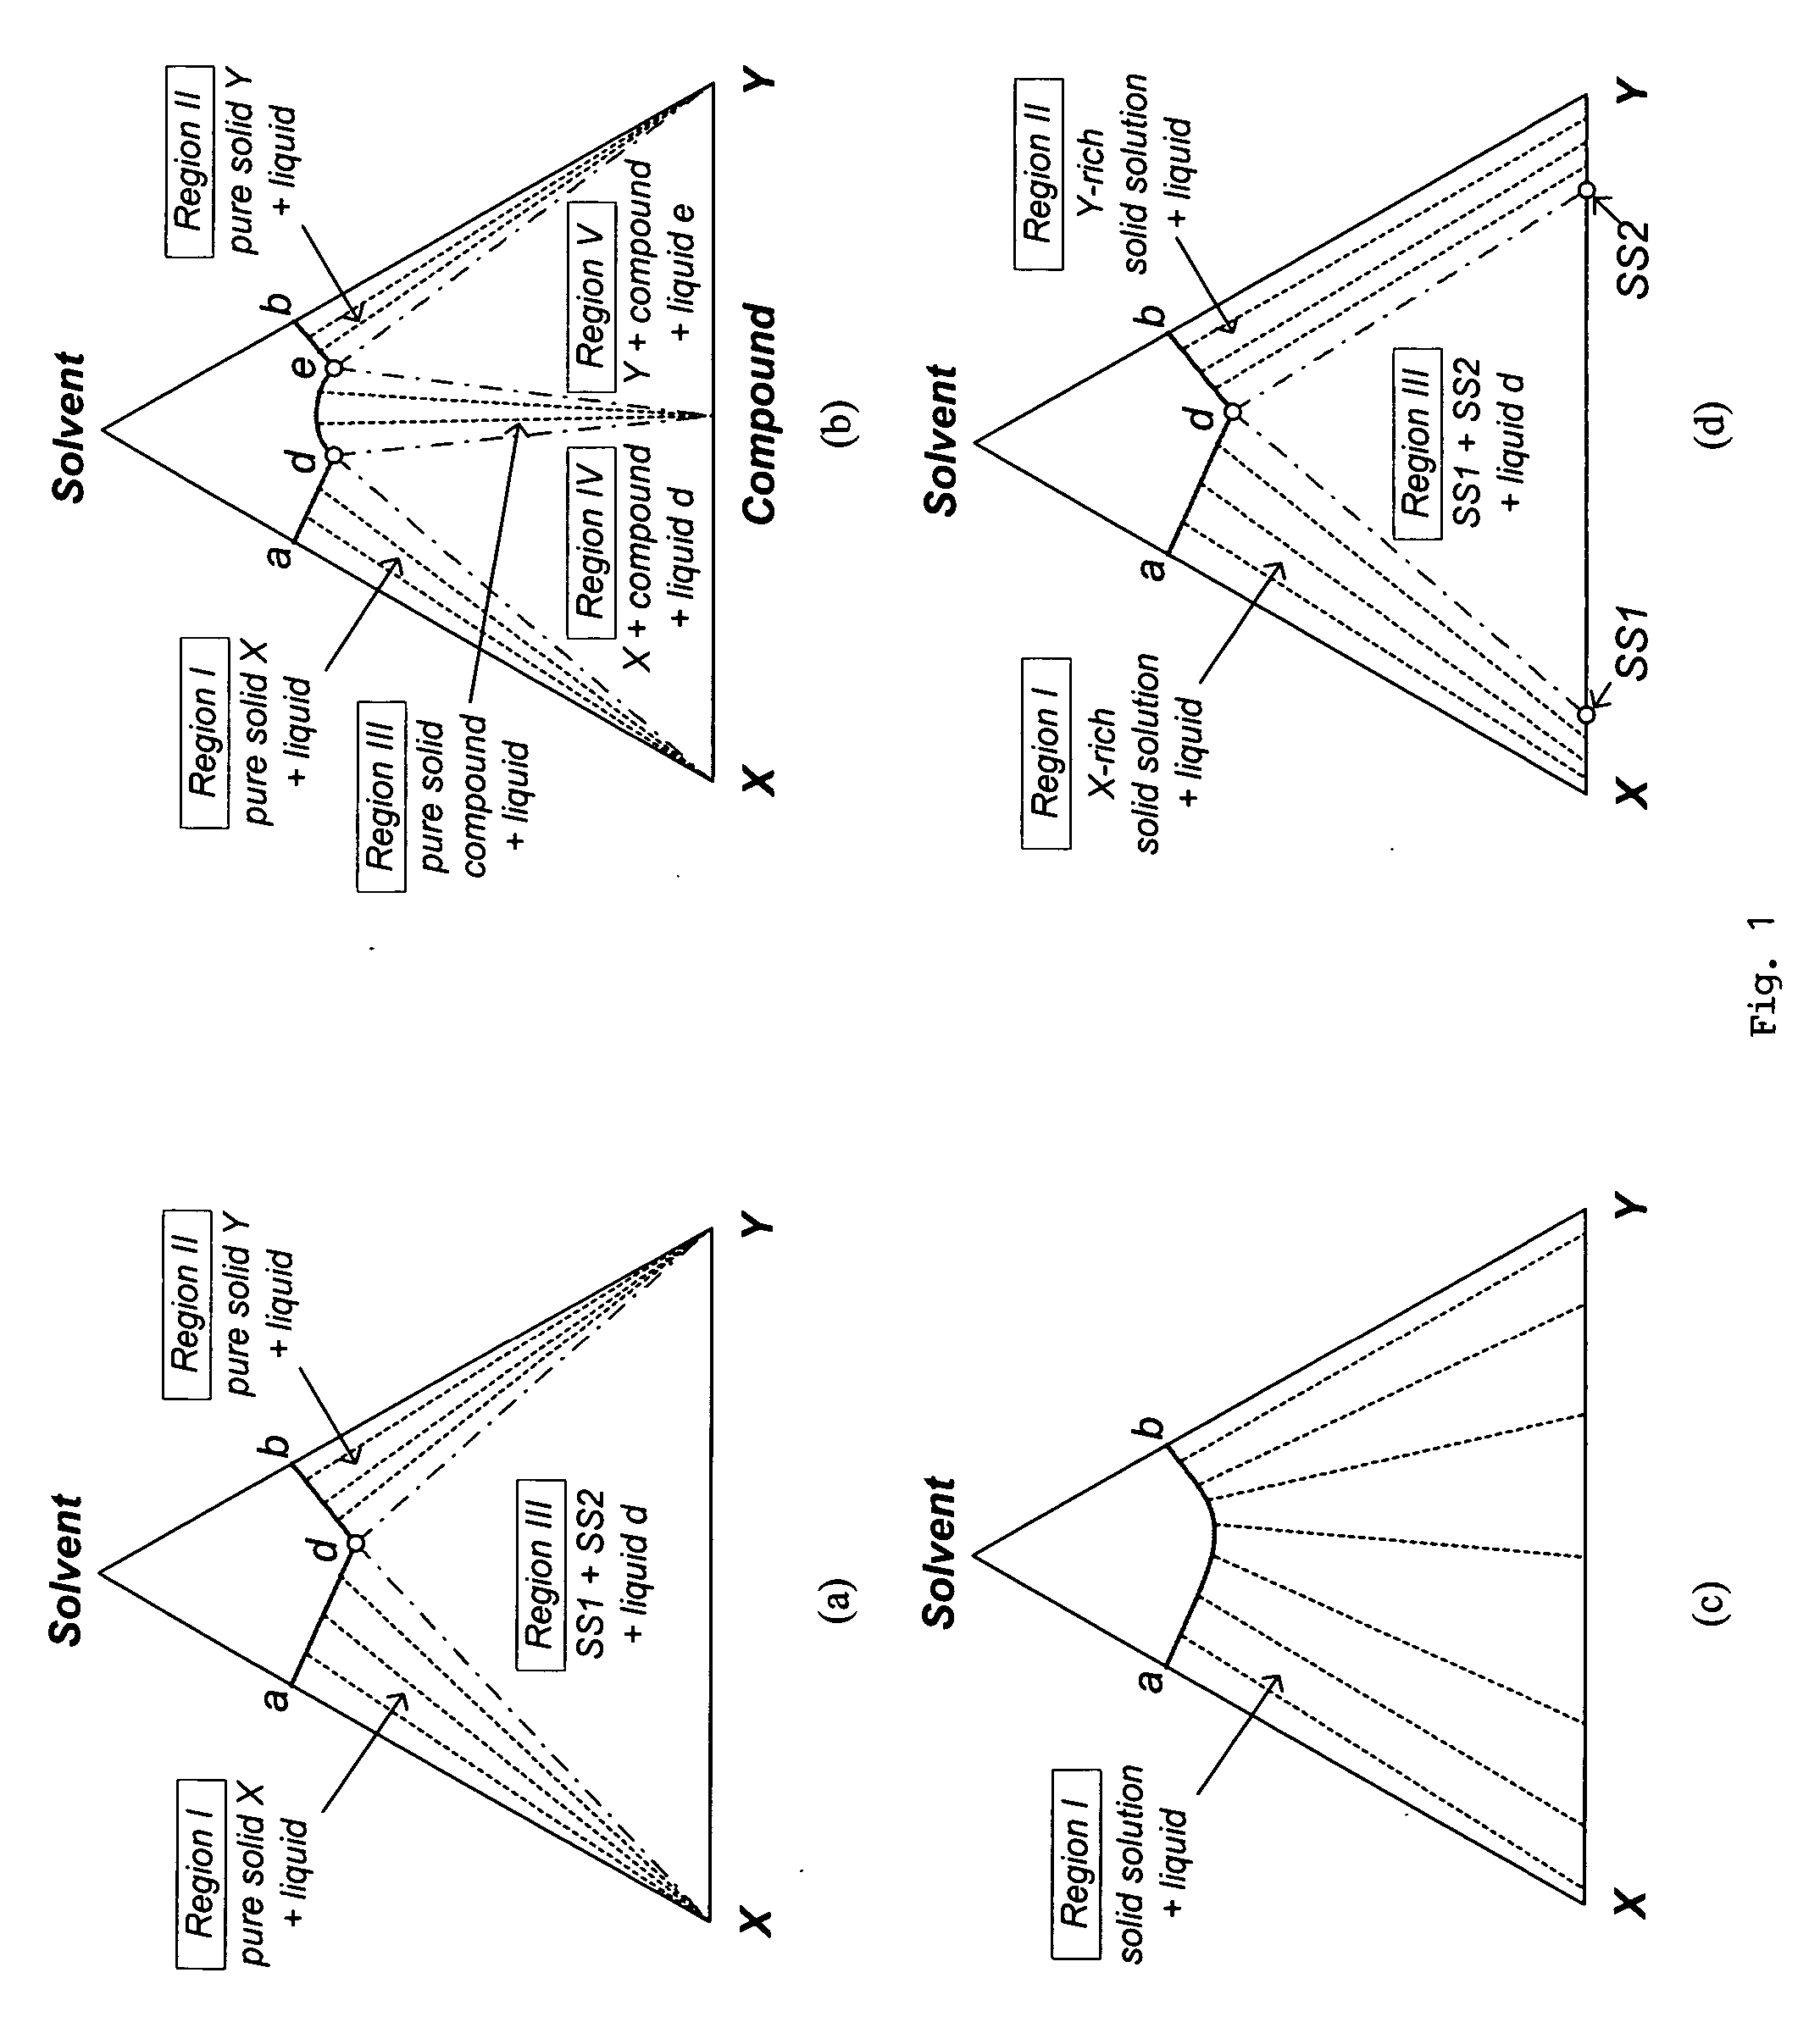 Separation of fullerene C60 and C70 using crystallization